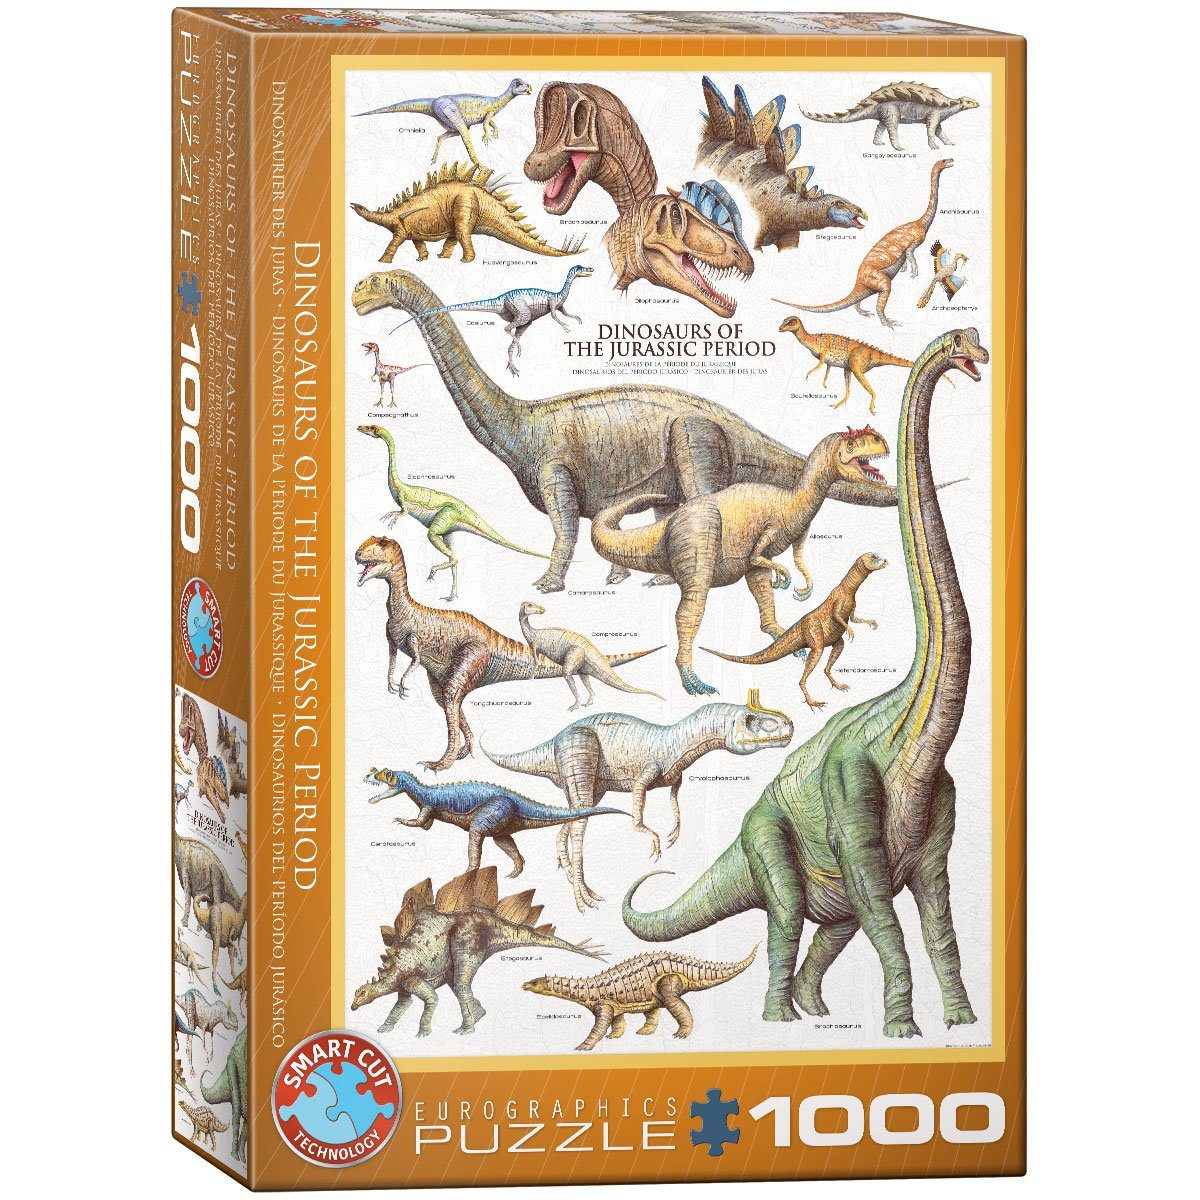 empireposter Puzzle Dinosaurier der Jura Zeit - 1000 Teile Puzzle Format 68x48 cm., 1000 Puzzleteile